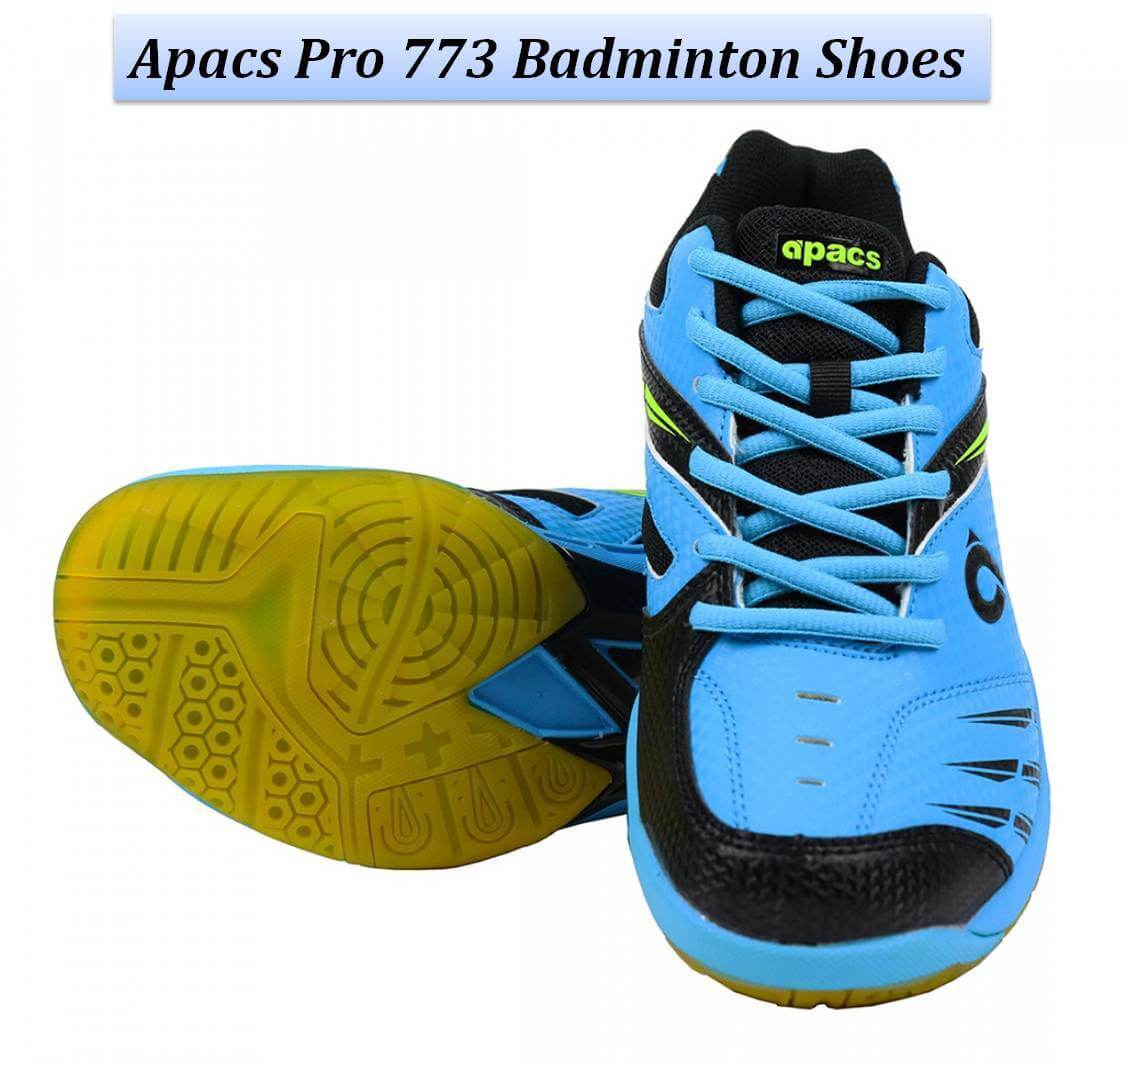 Apacs_Pro_773_Badminton_Shoes_Khelmart_2020